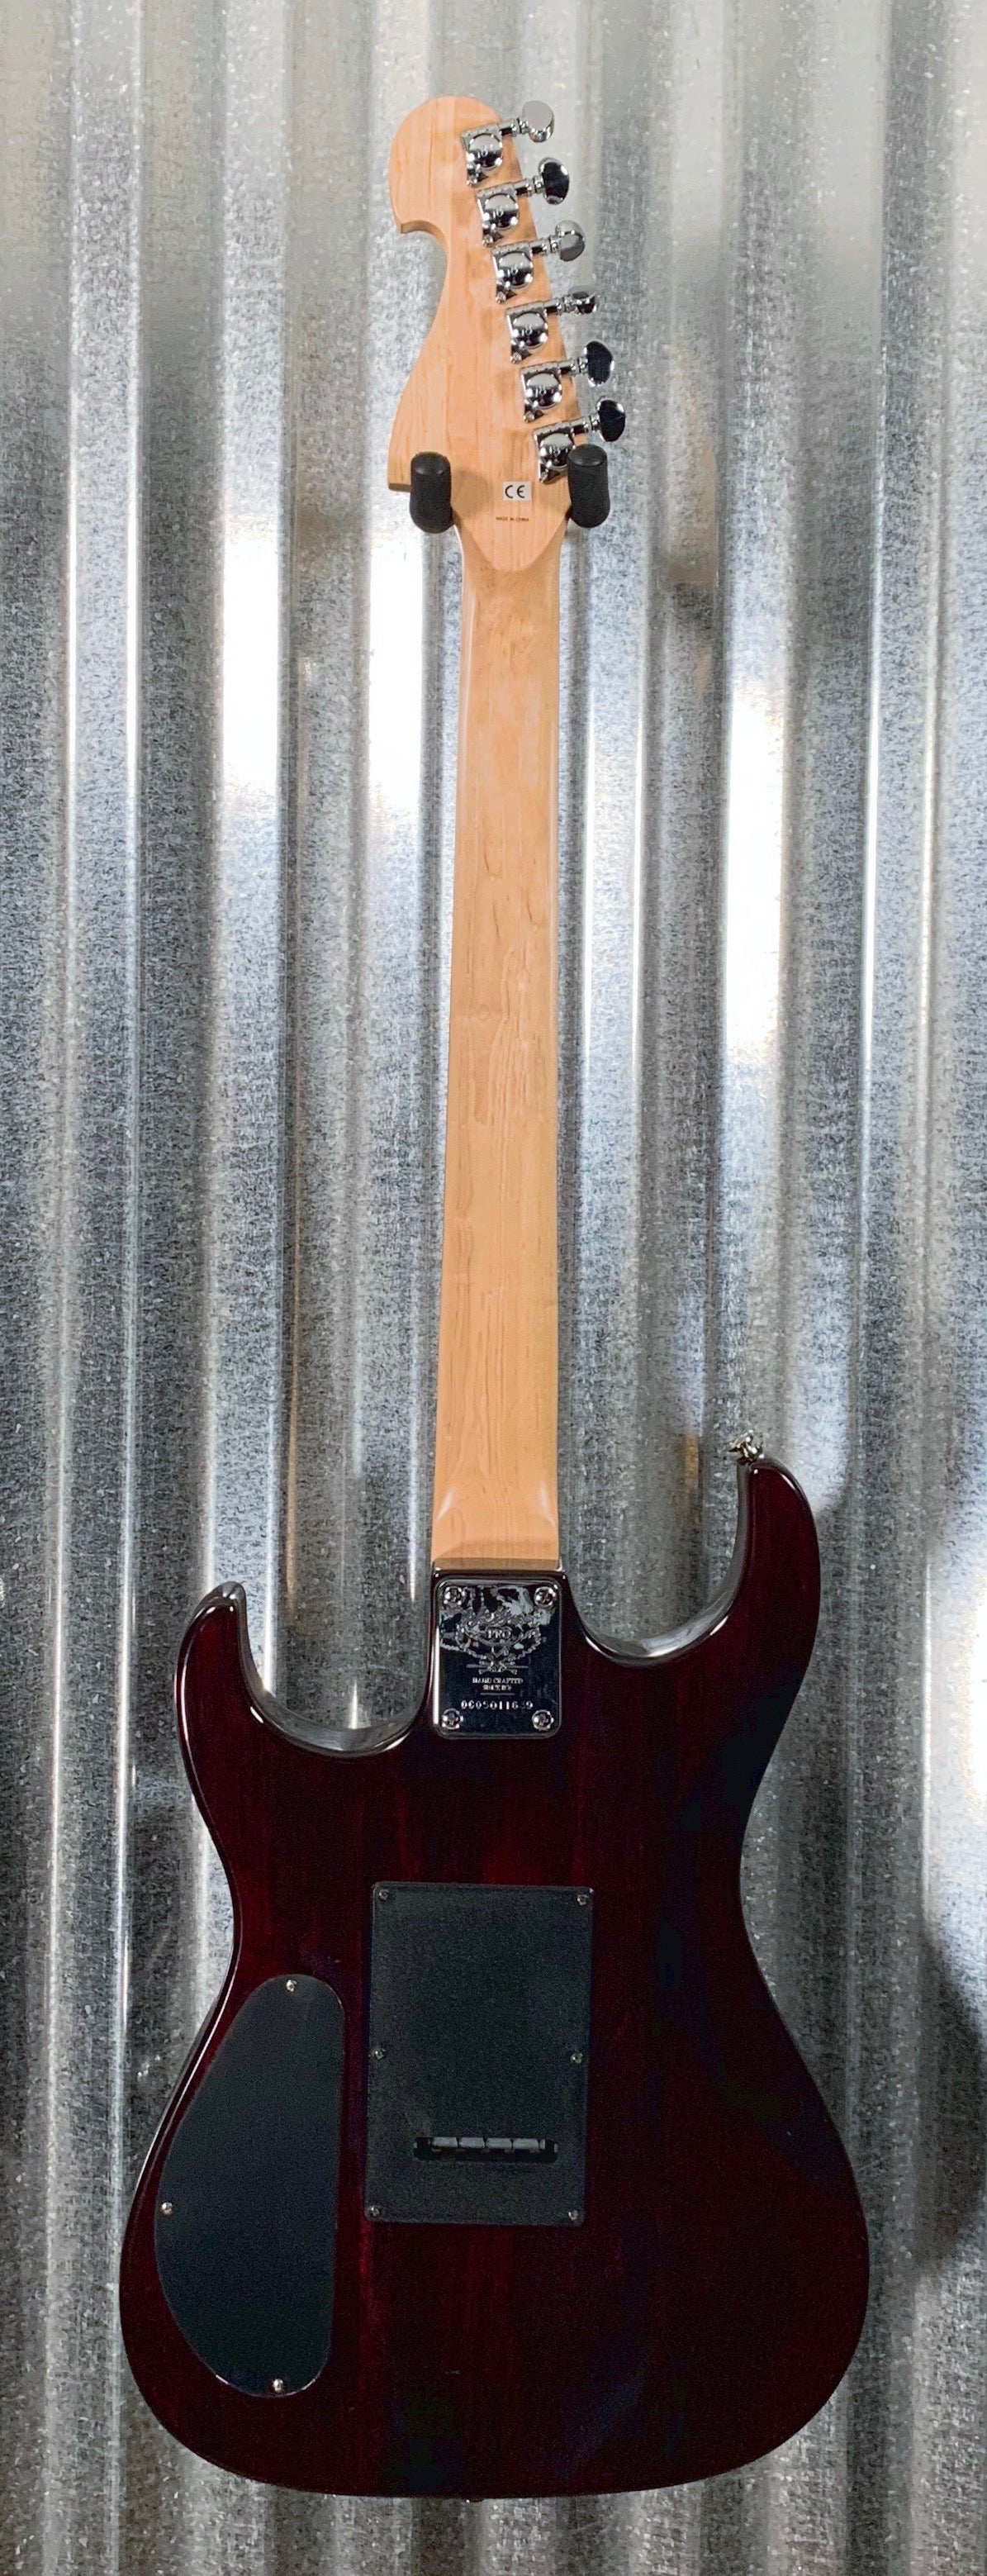 Washburn Pro X Series HSH Floyd Rose Trans Dark Cherry Guitar & Bag #1639 Used